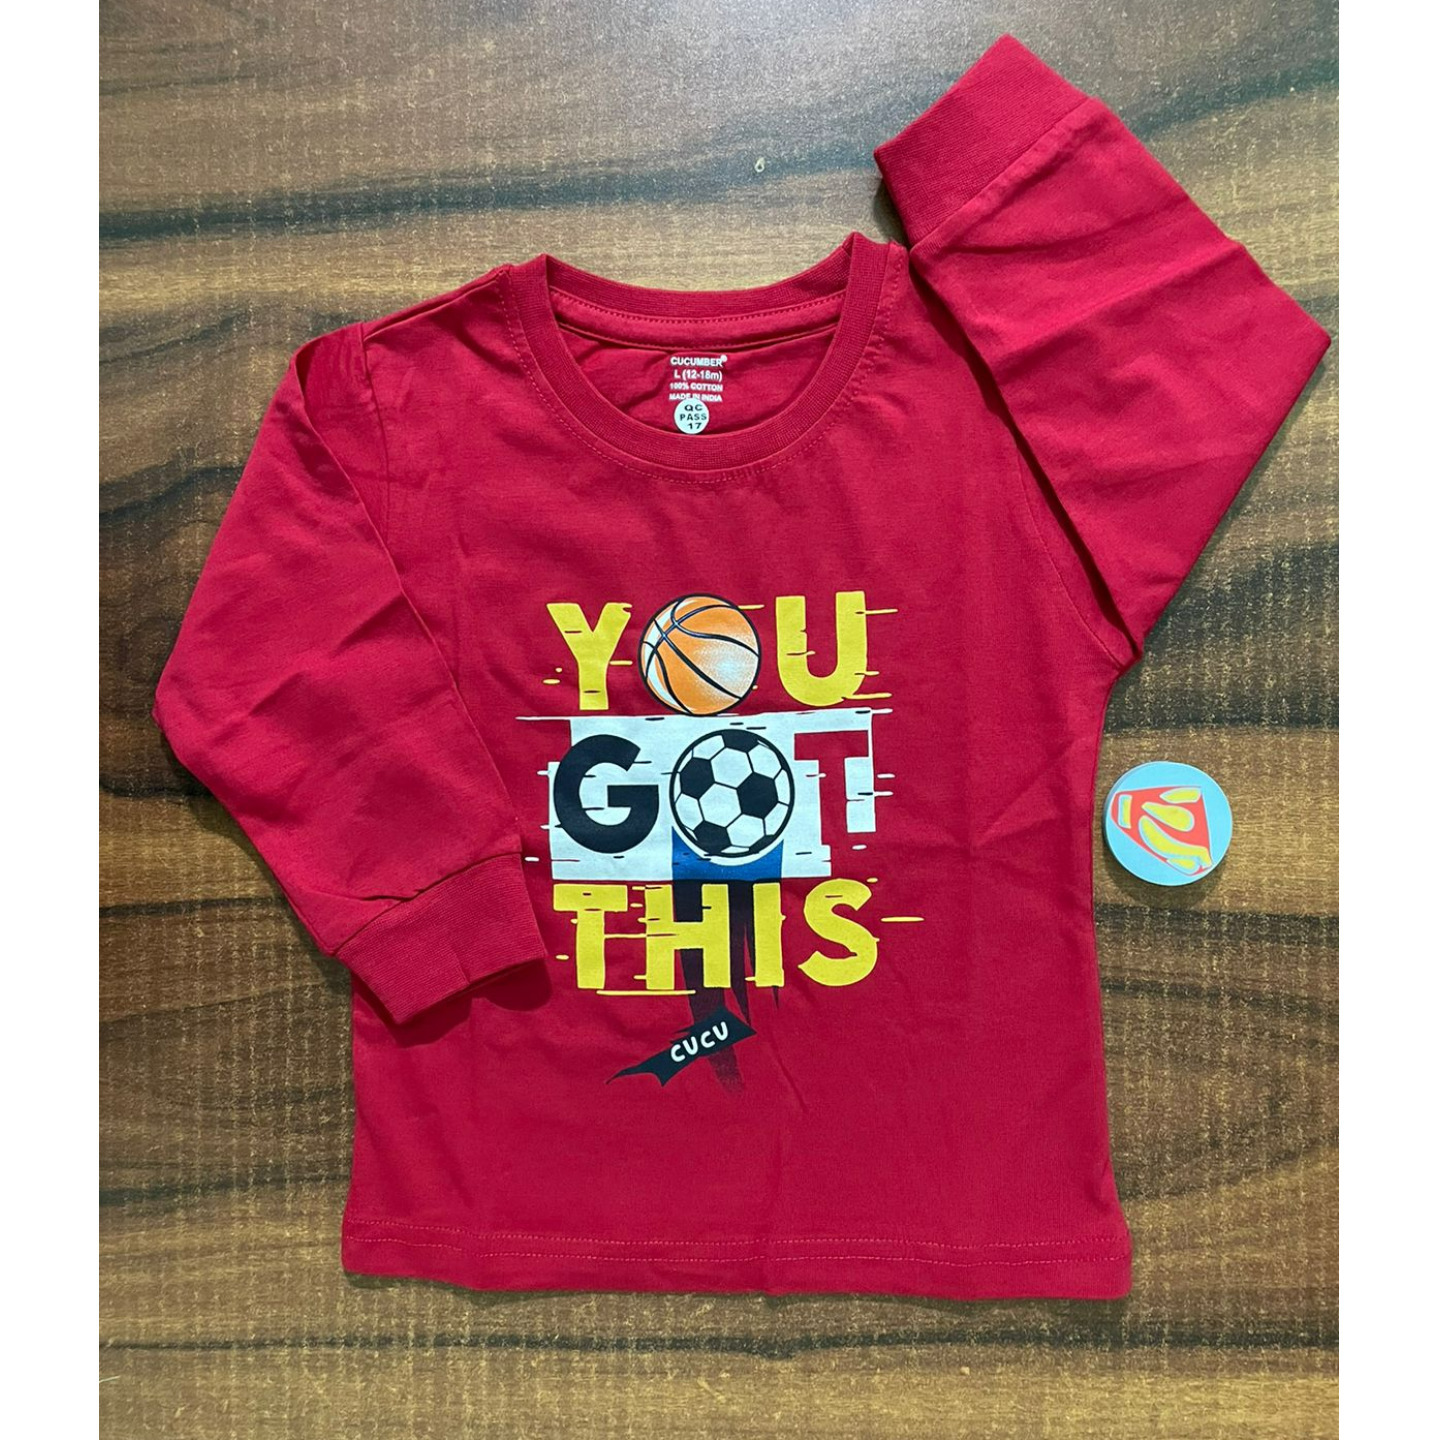 Cucumber Newborn Infant Baby Full Sleeves T-Shirts 0-3 Years